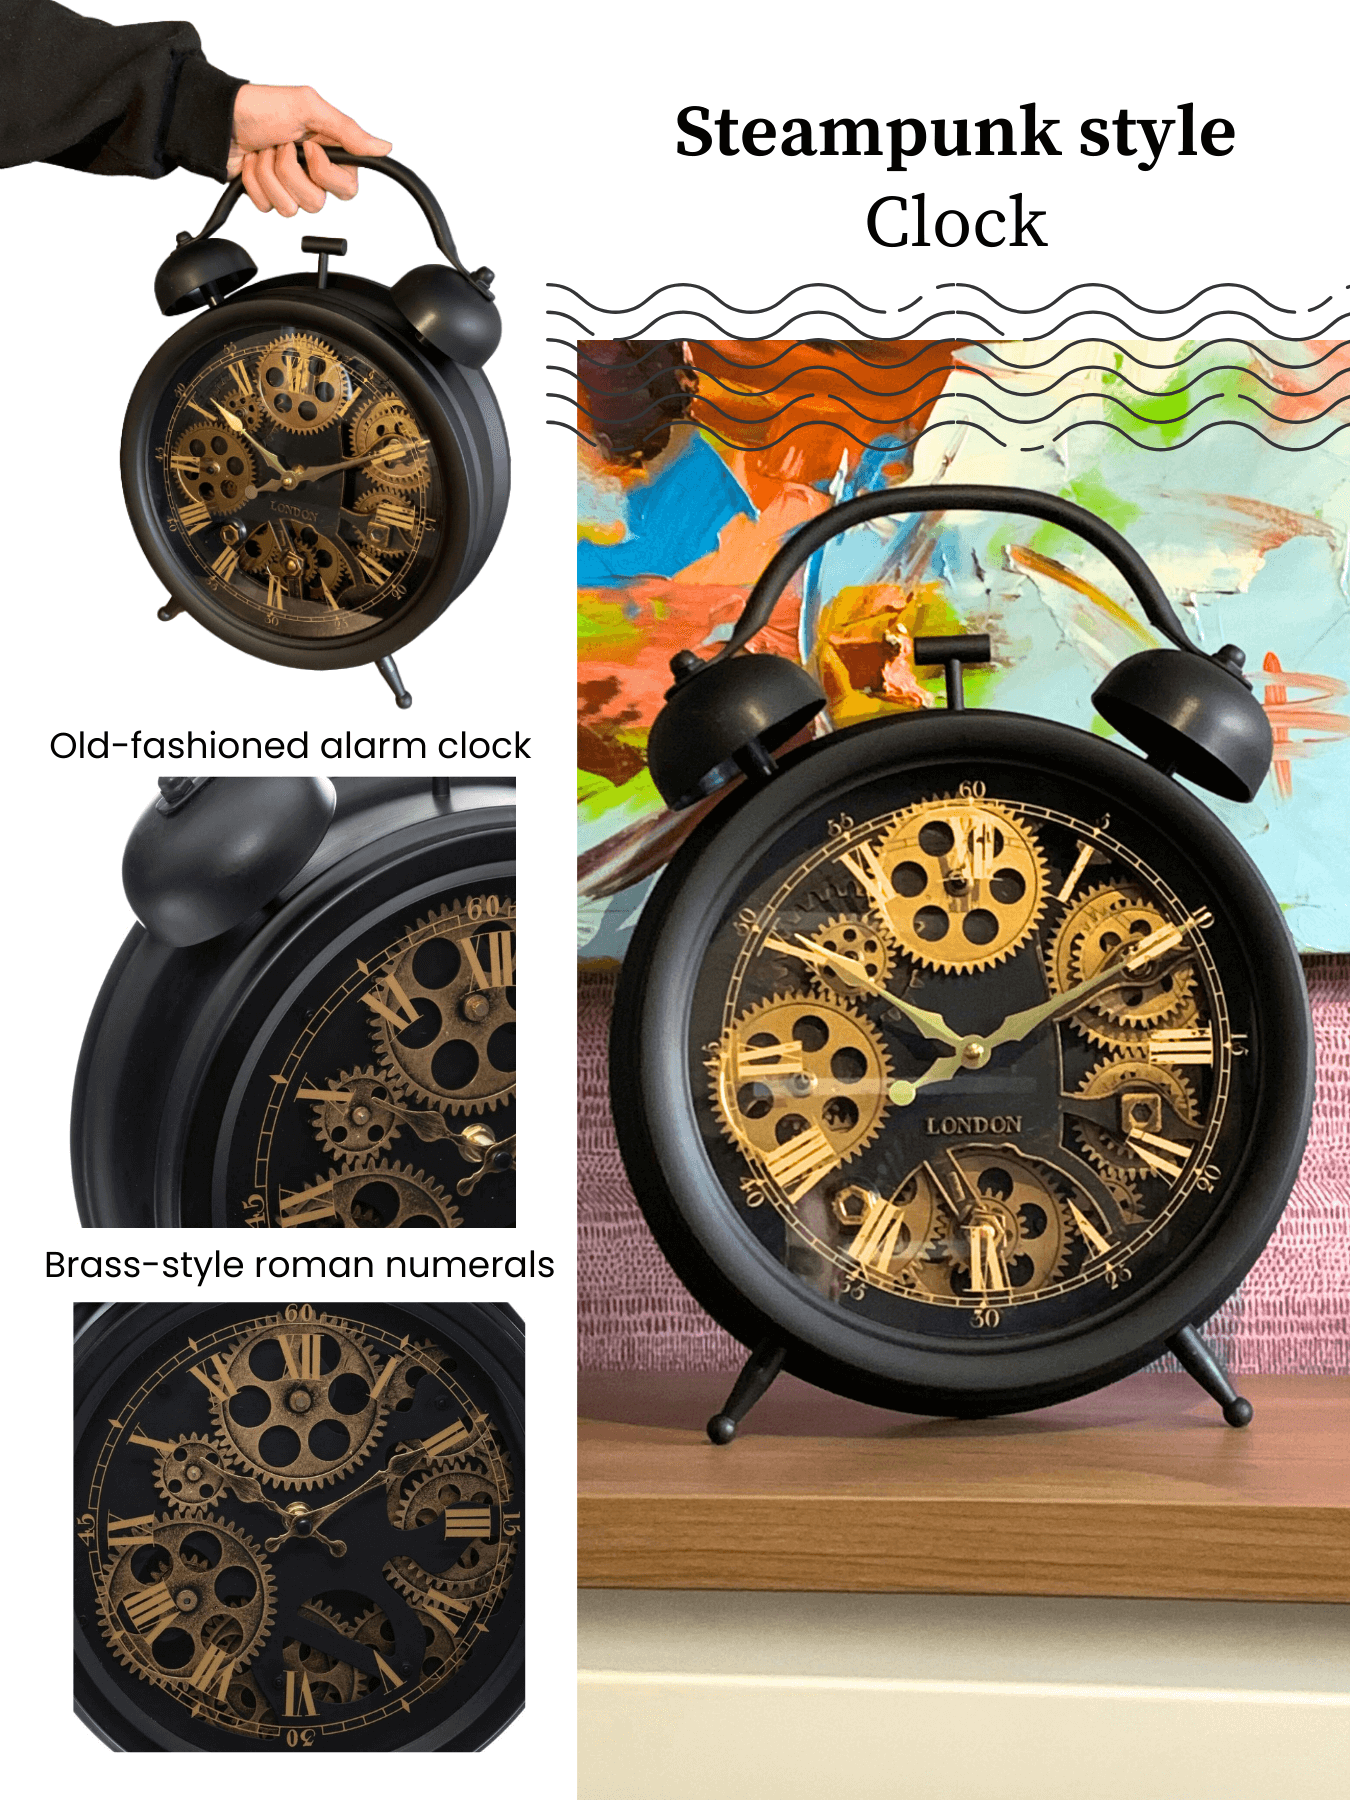 Grande horloge avec chiffres romains - London Gold and Black Design 